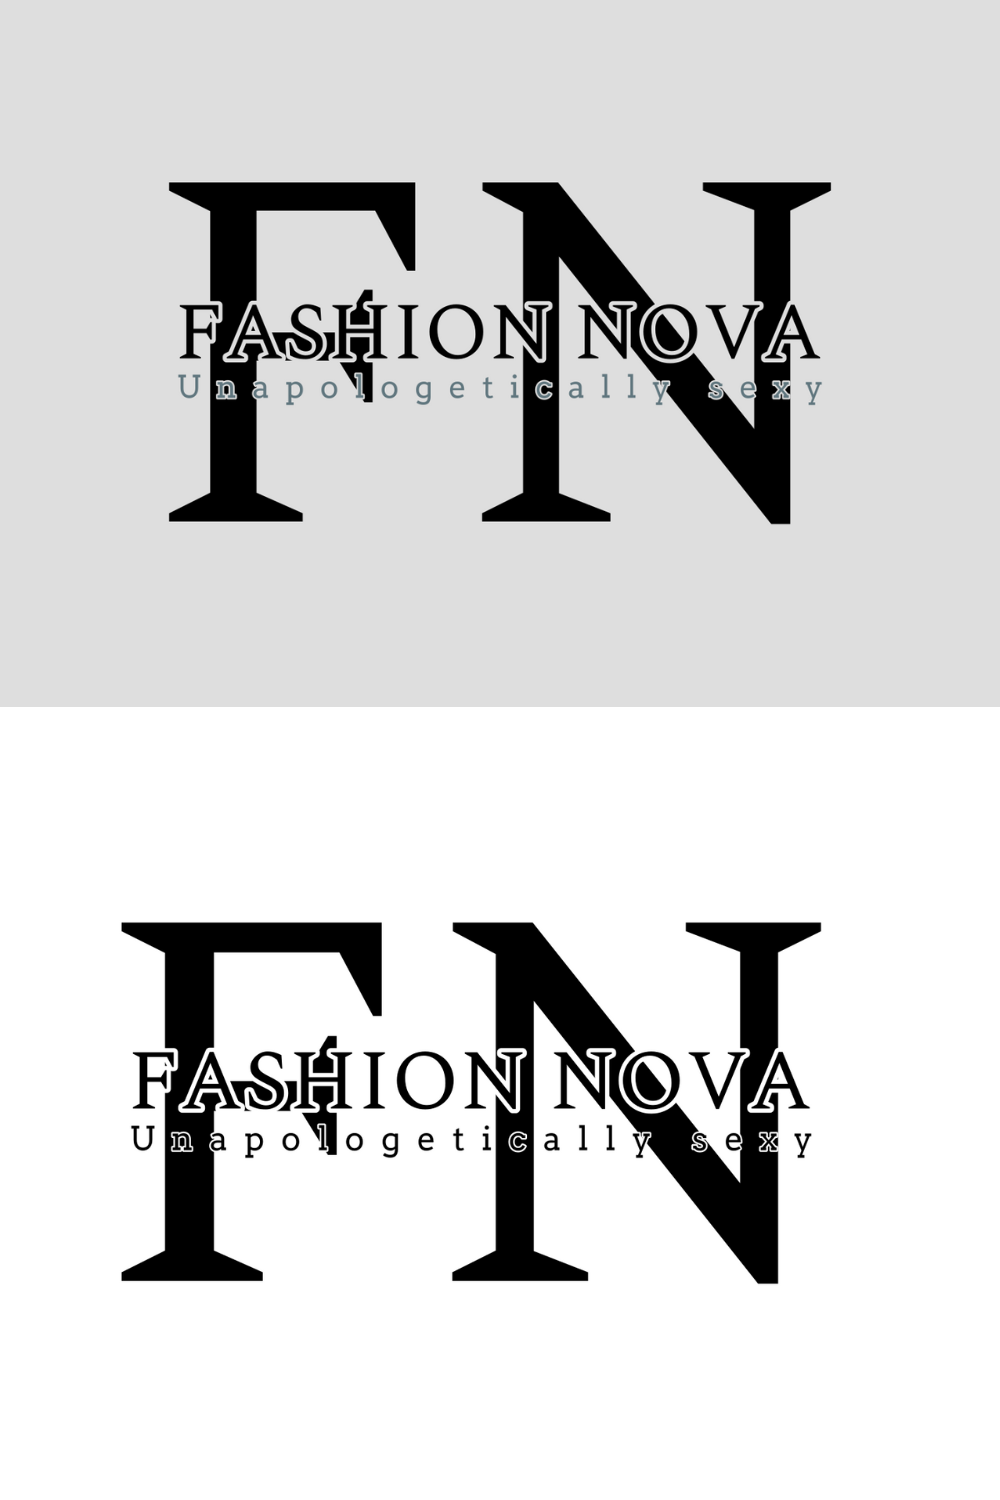 Fashion Nova pinterest preview image.